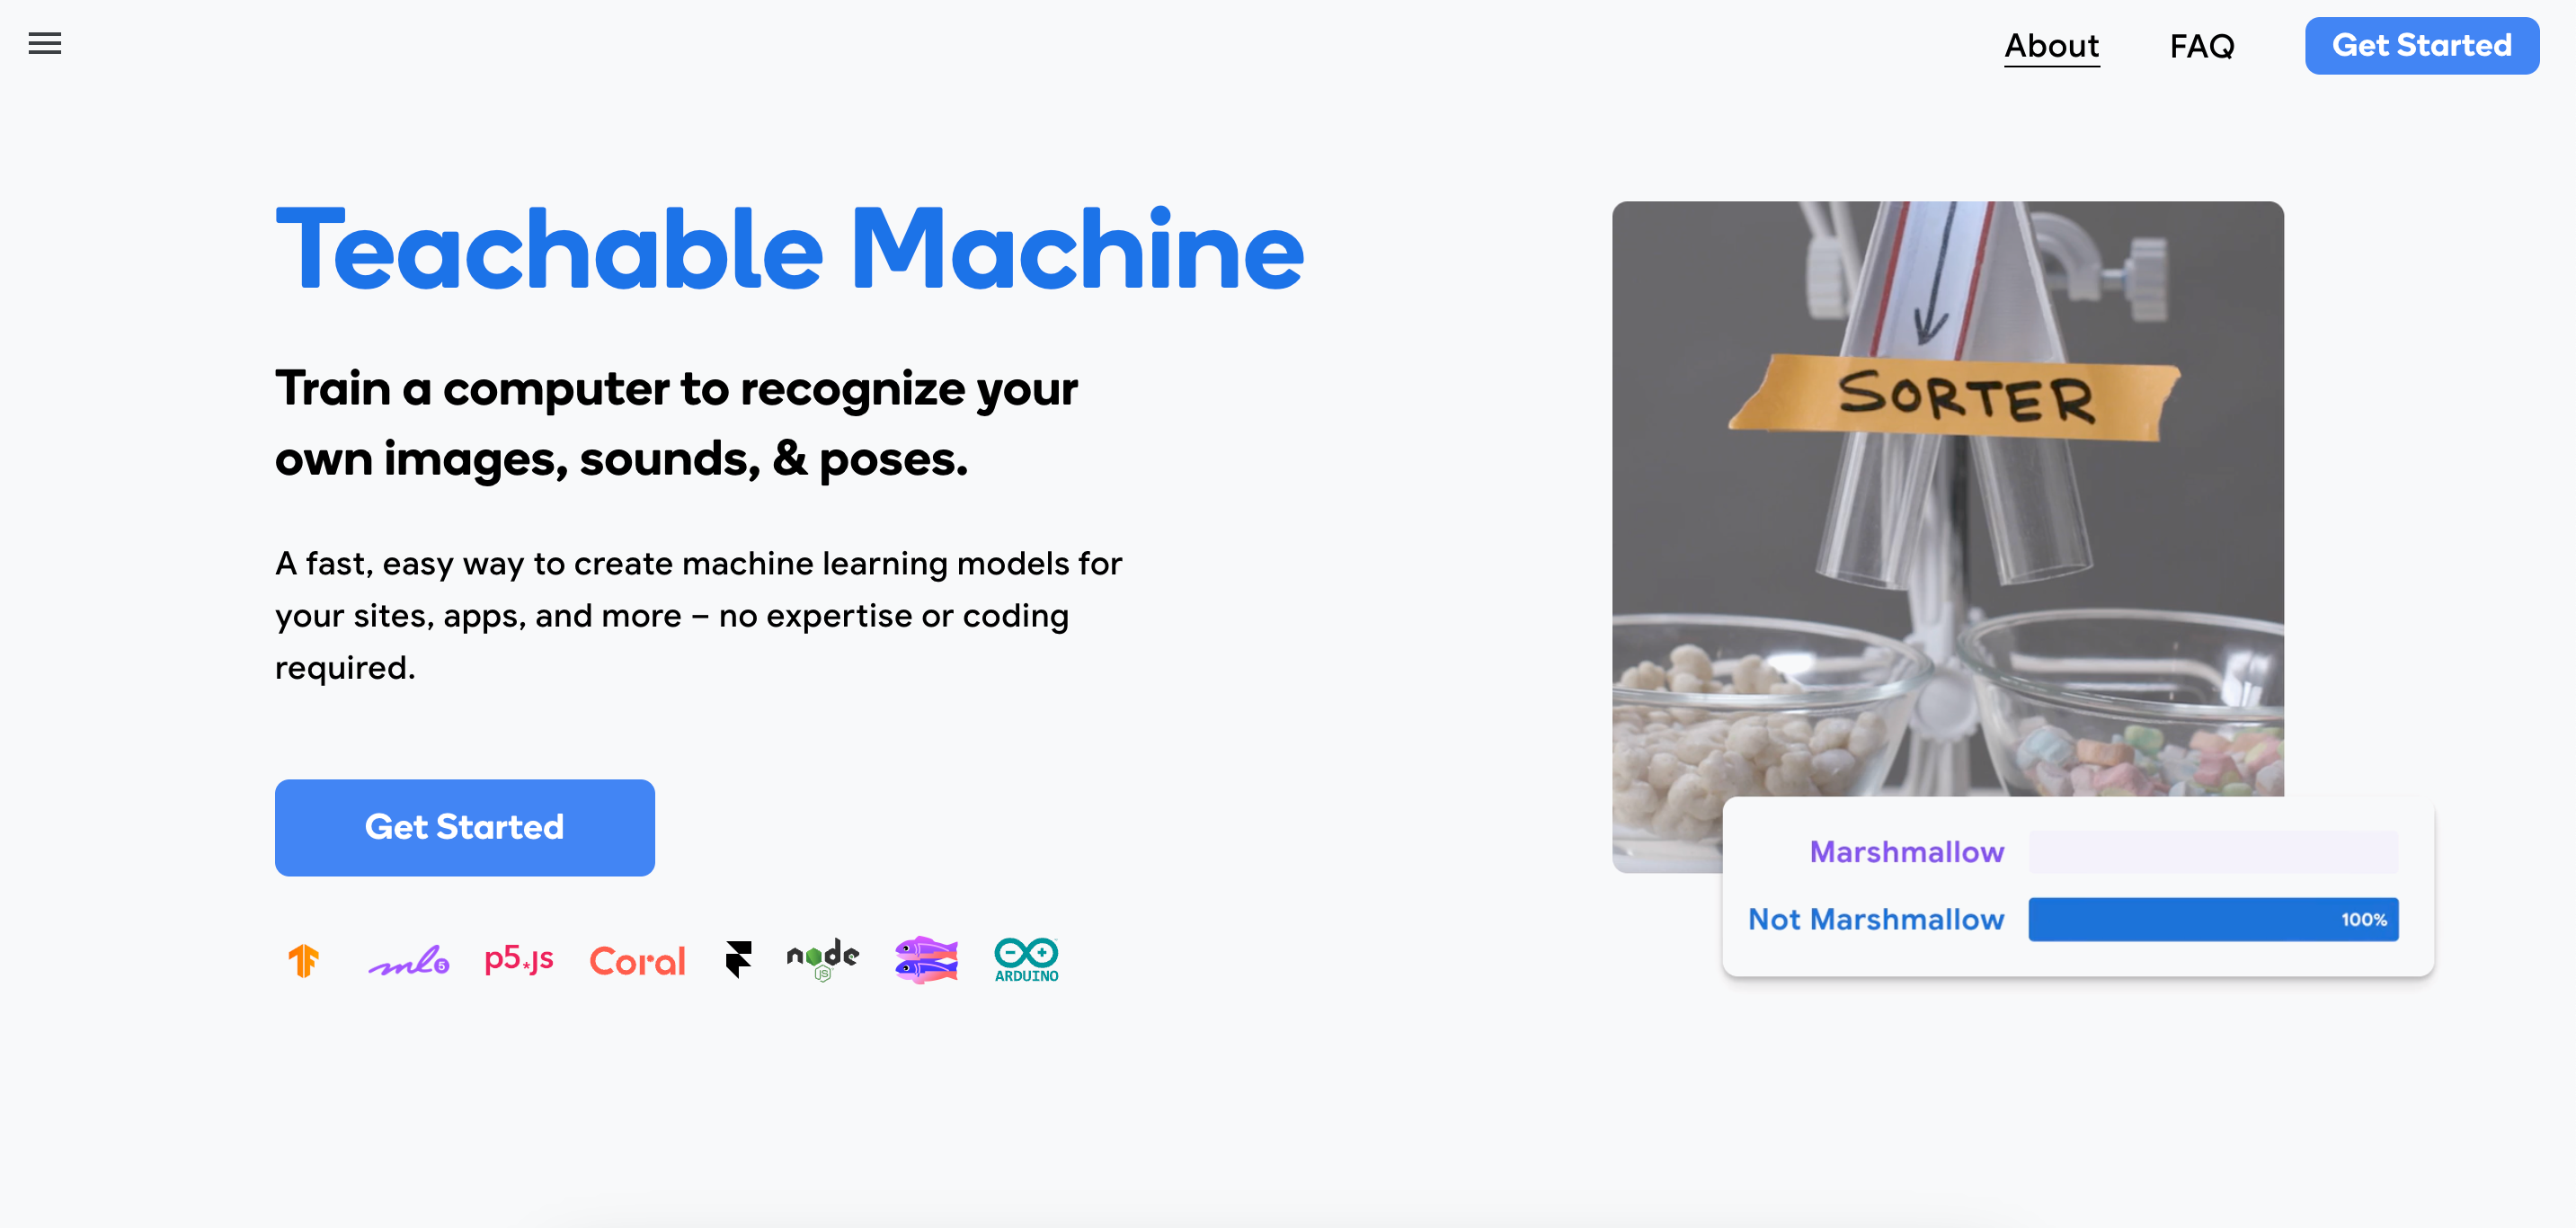 Google Teachable Machine